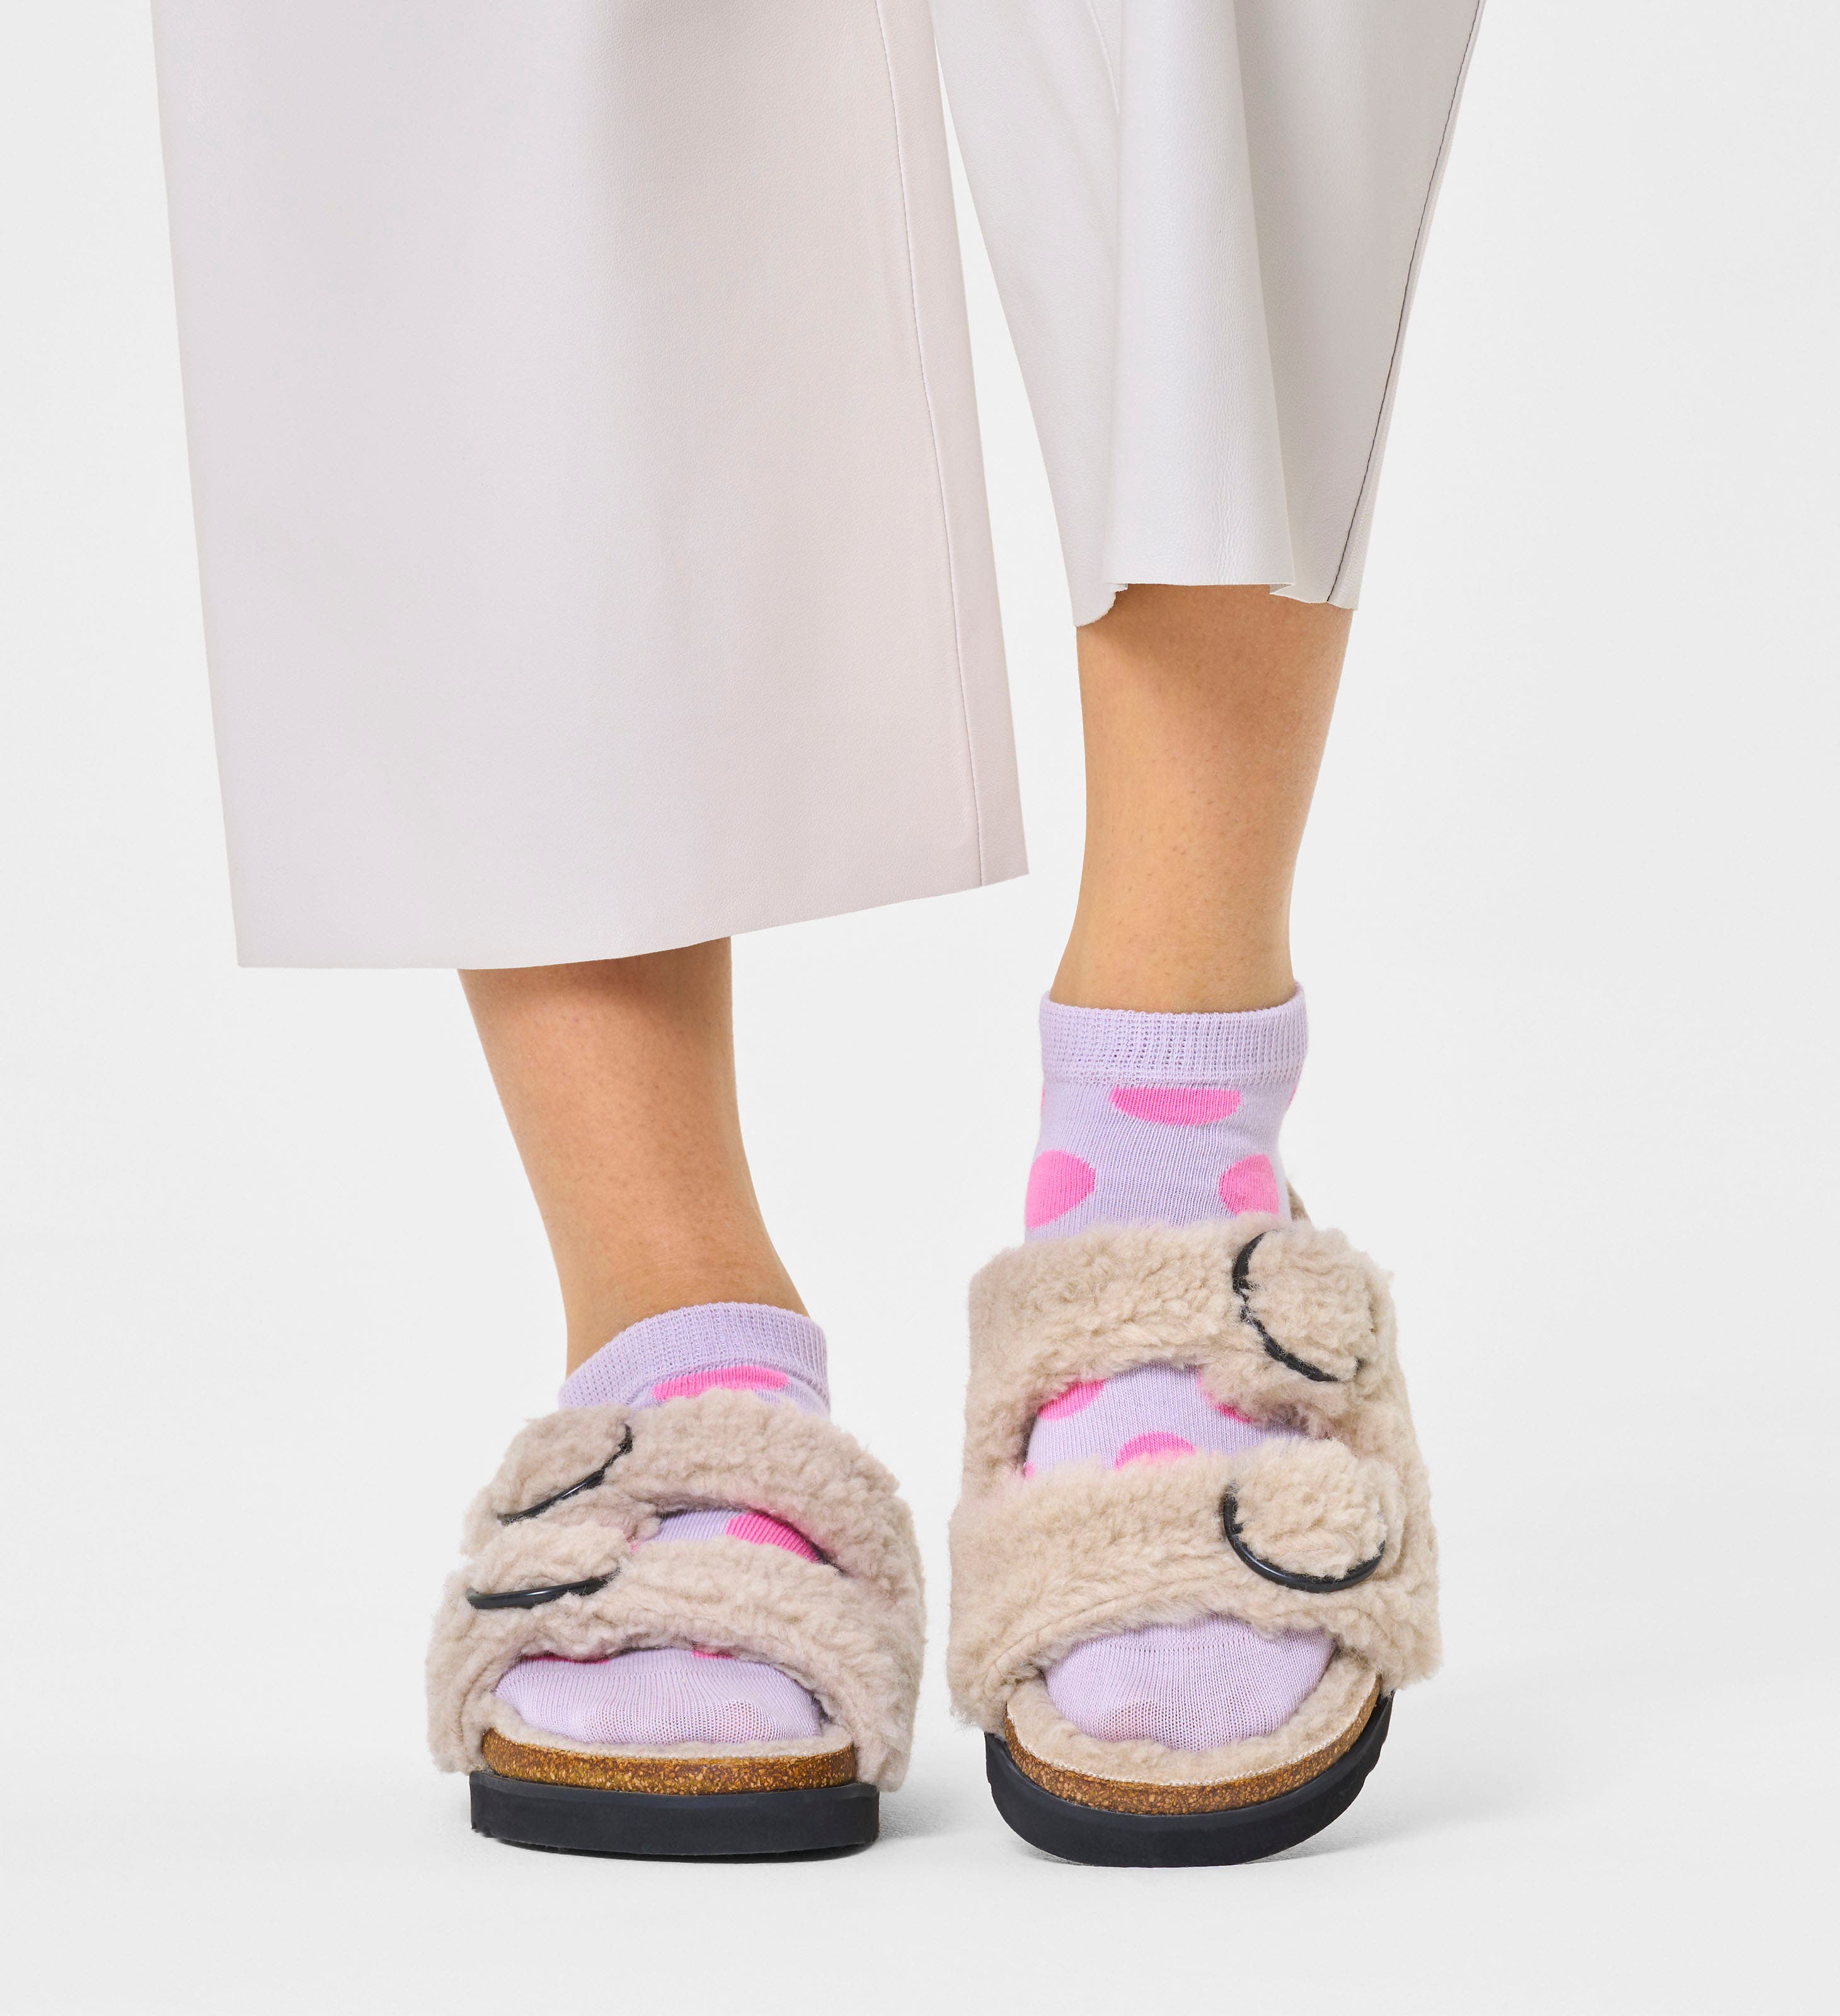 Happy Socks Women's Faded Diamond Sneaker Liner Socks, 3-Pack 